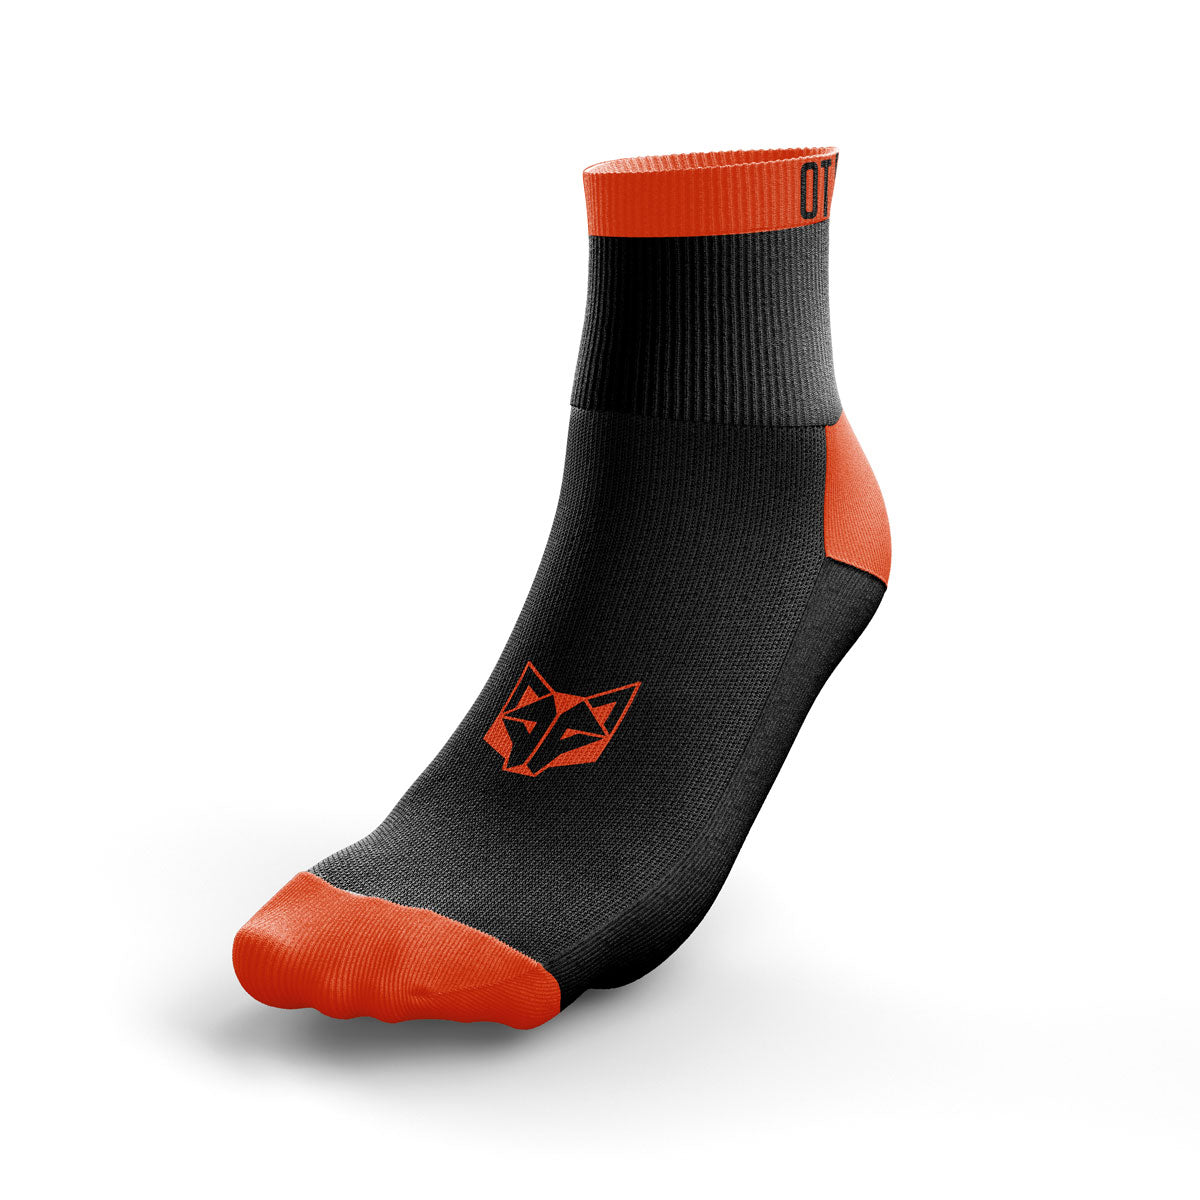 OTSO Low Running Socks - Black and Orange